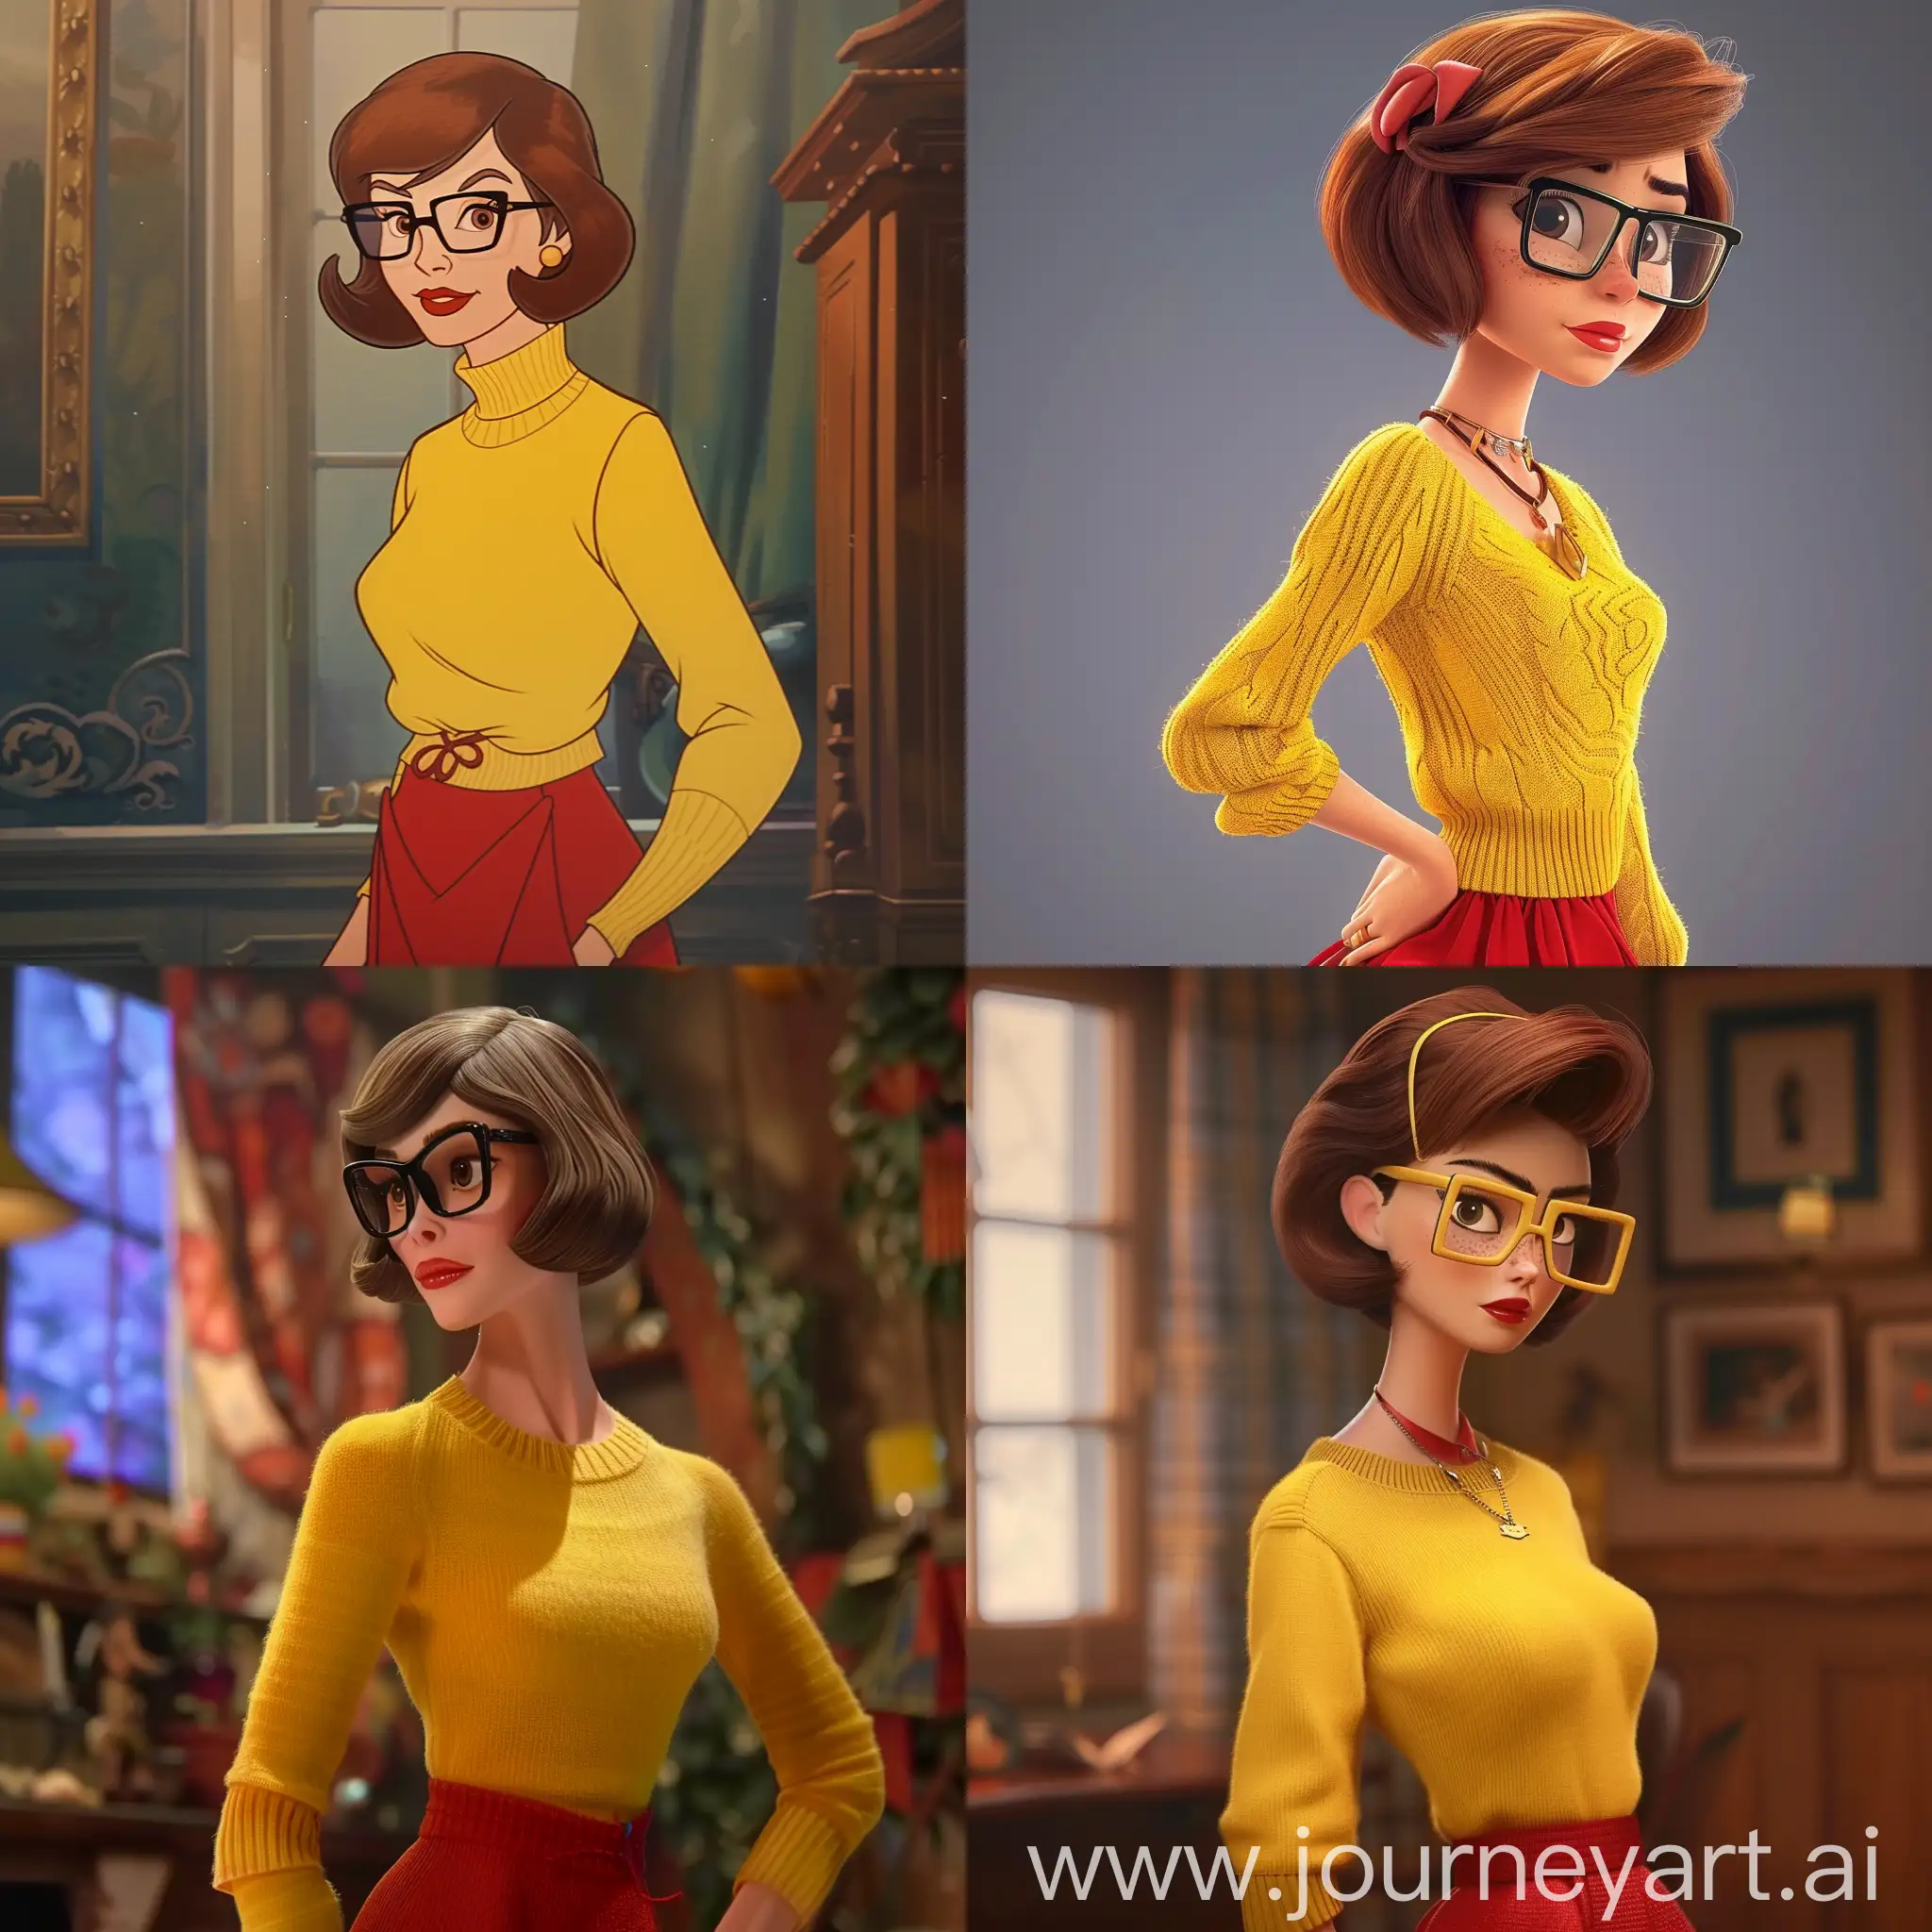 Smart-Woman-in-Velma-Dinkley-Costume-Disney-Animation-Style